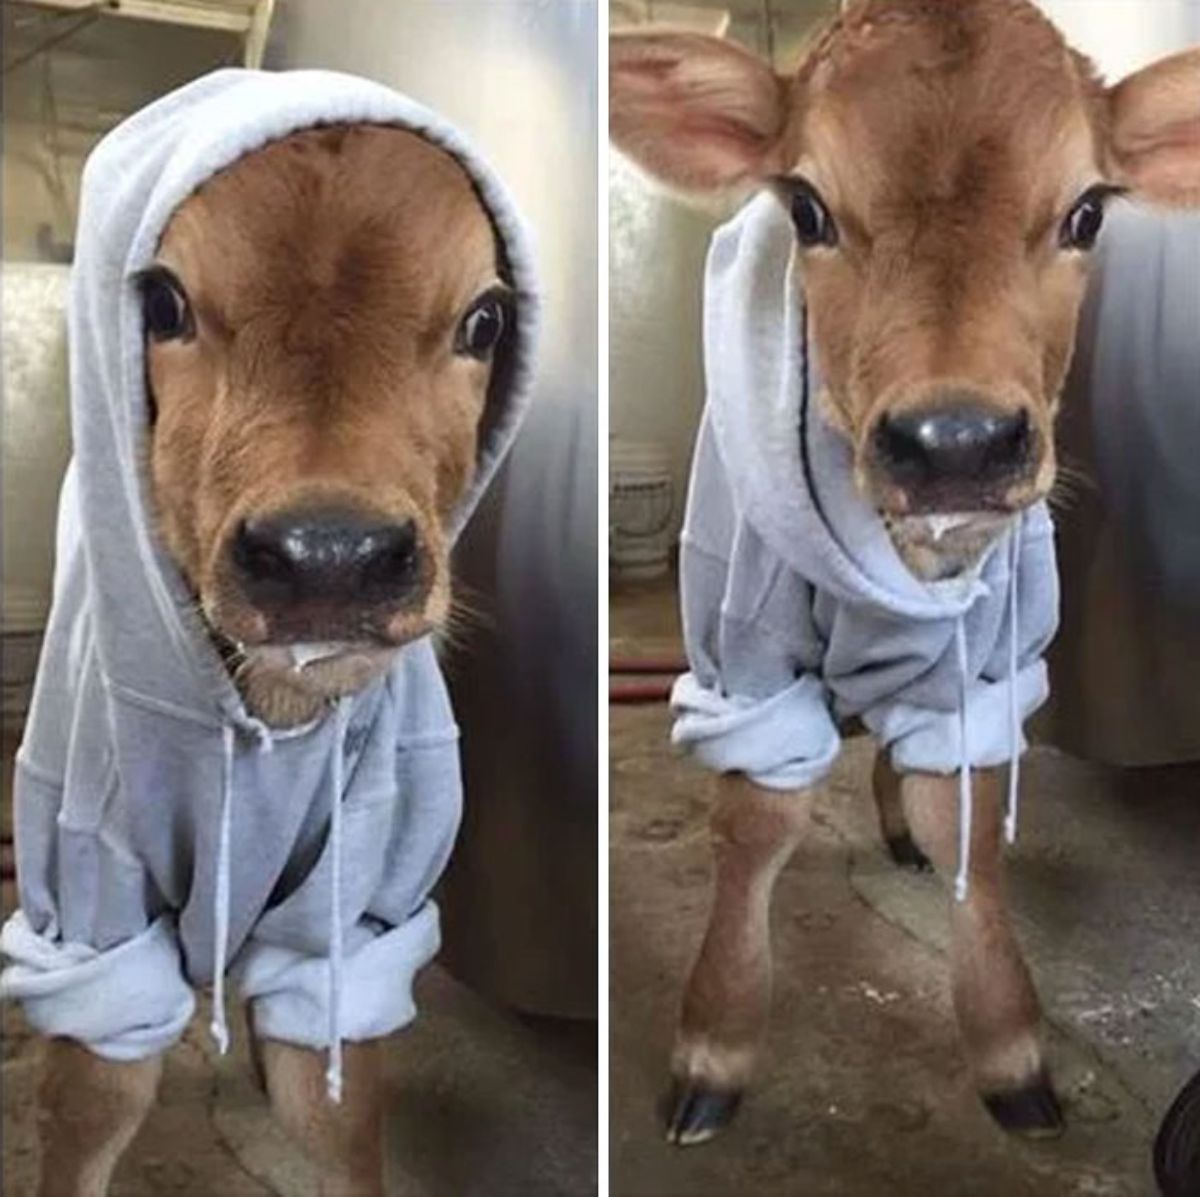 2 photos of a brown calf wearing a blue hoodie